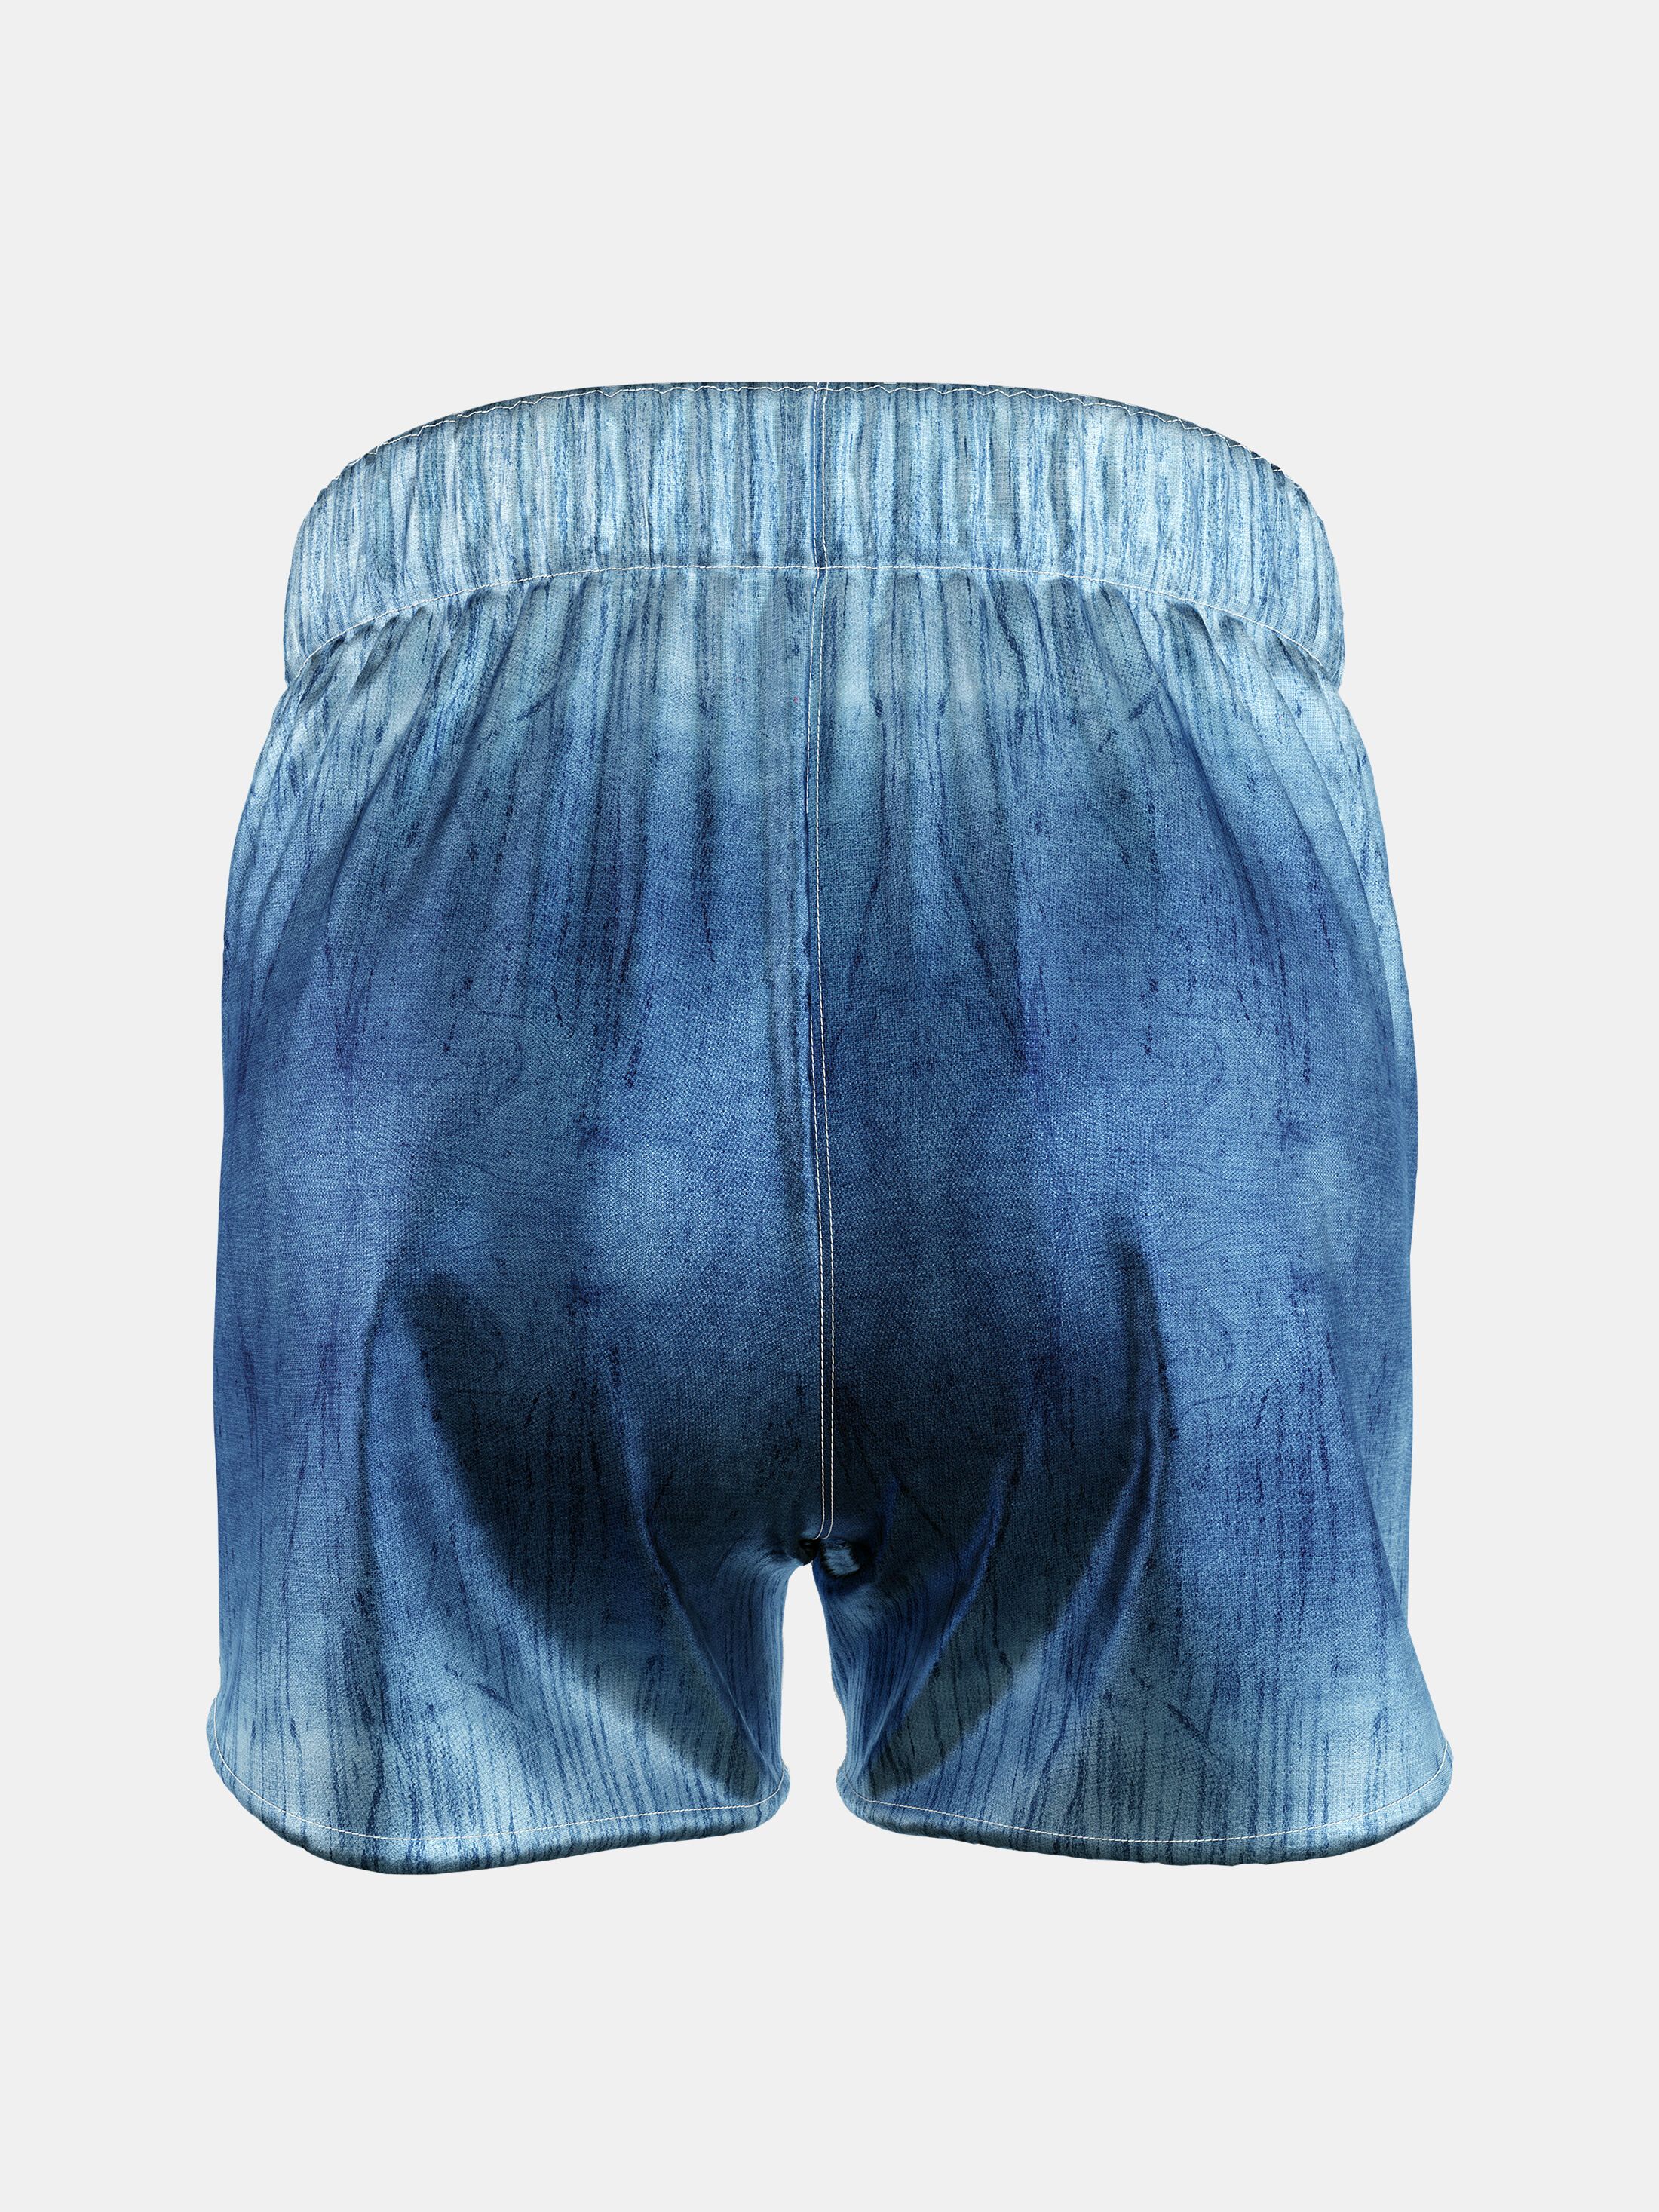 Design your own Custom Boxer Shorts